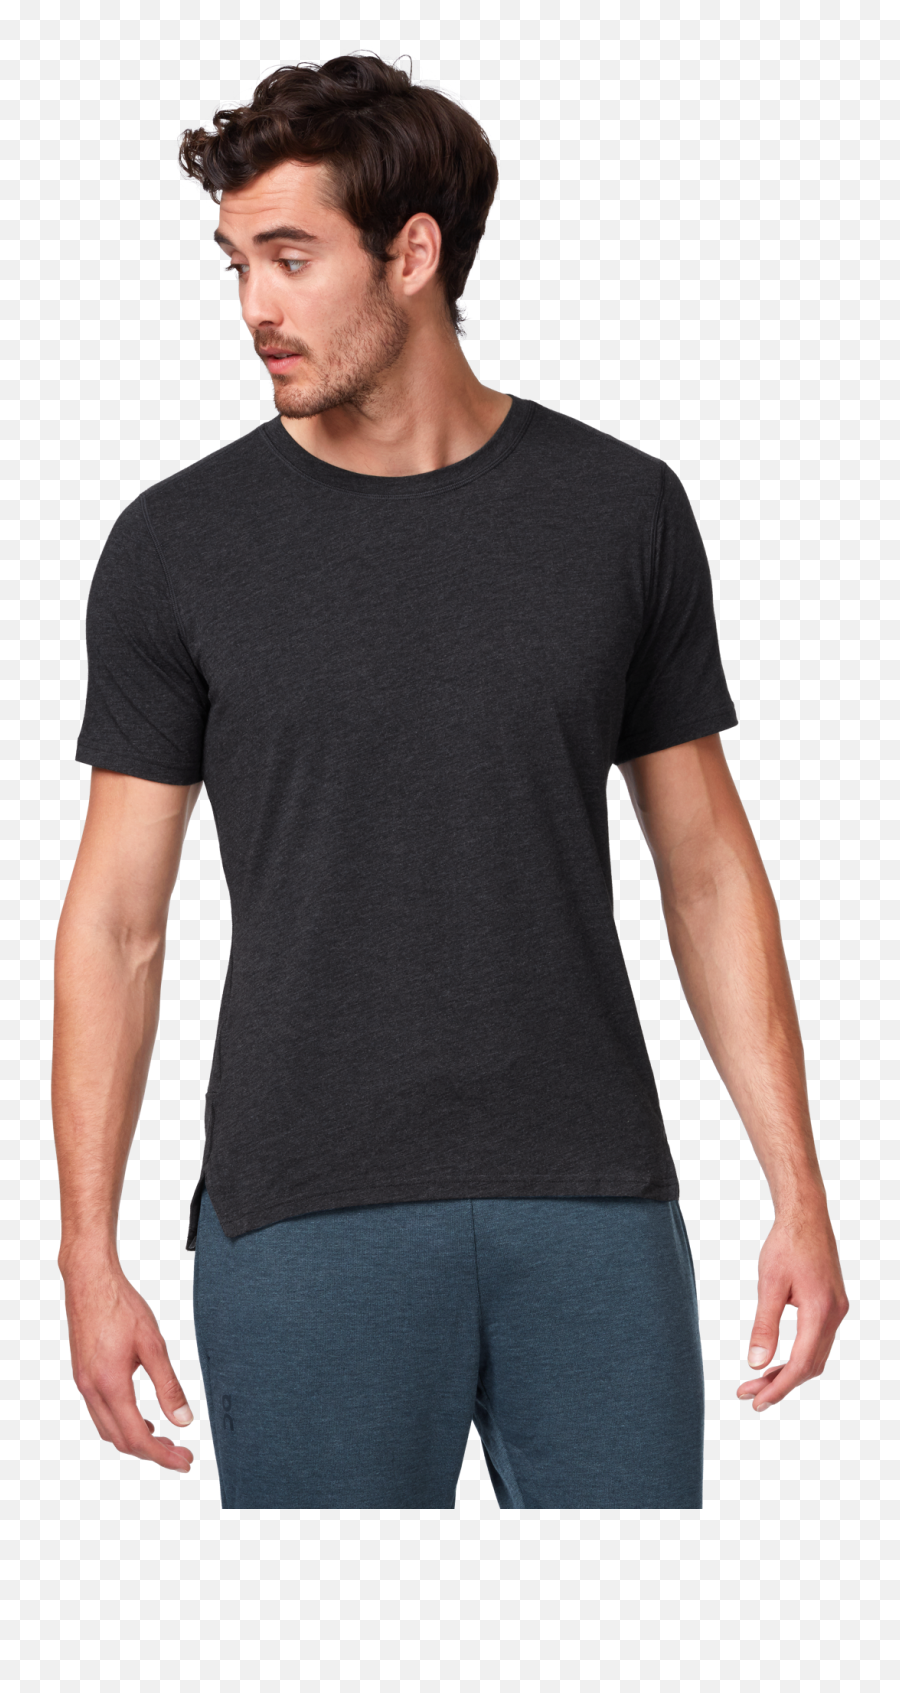 Comfort T Running Shirt With Antibacterial Fabric - shirt Png